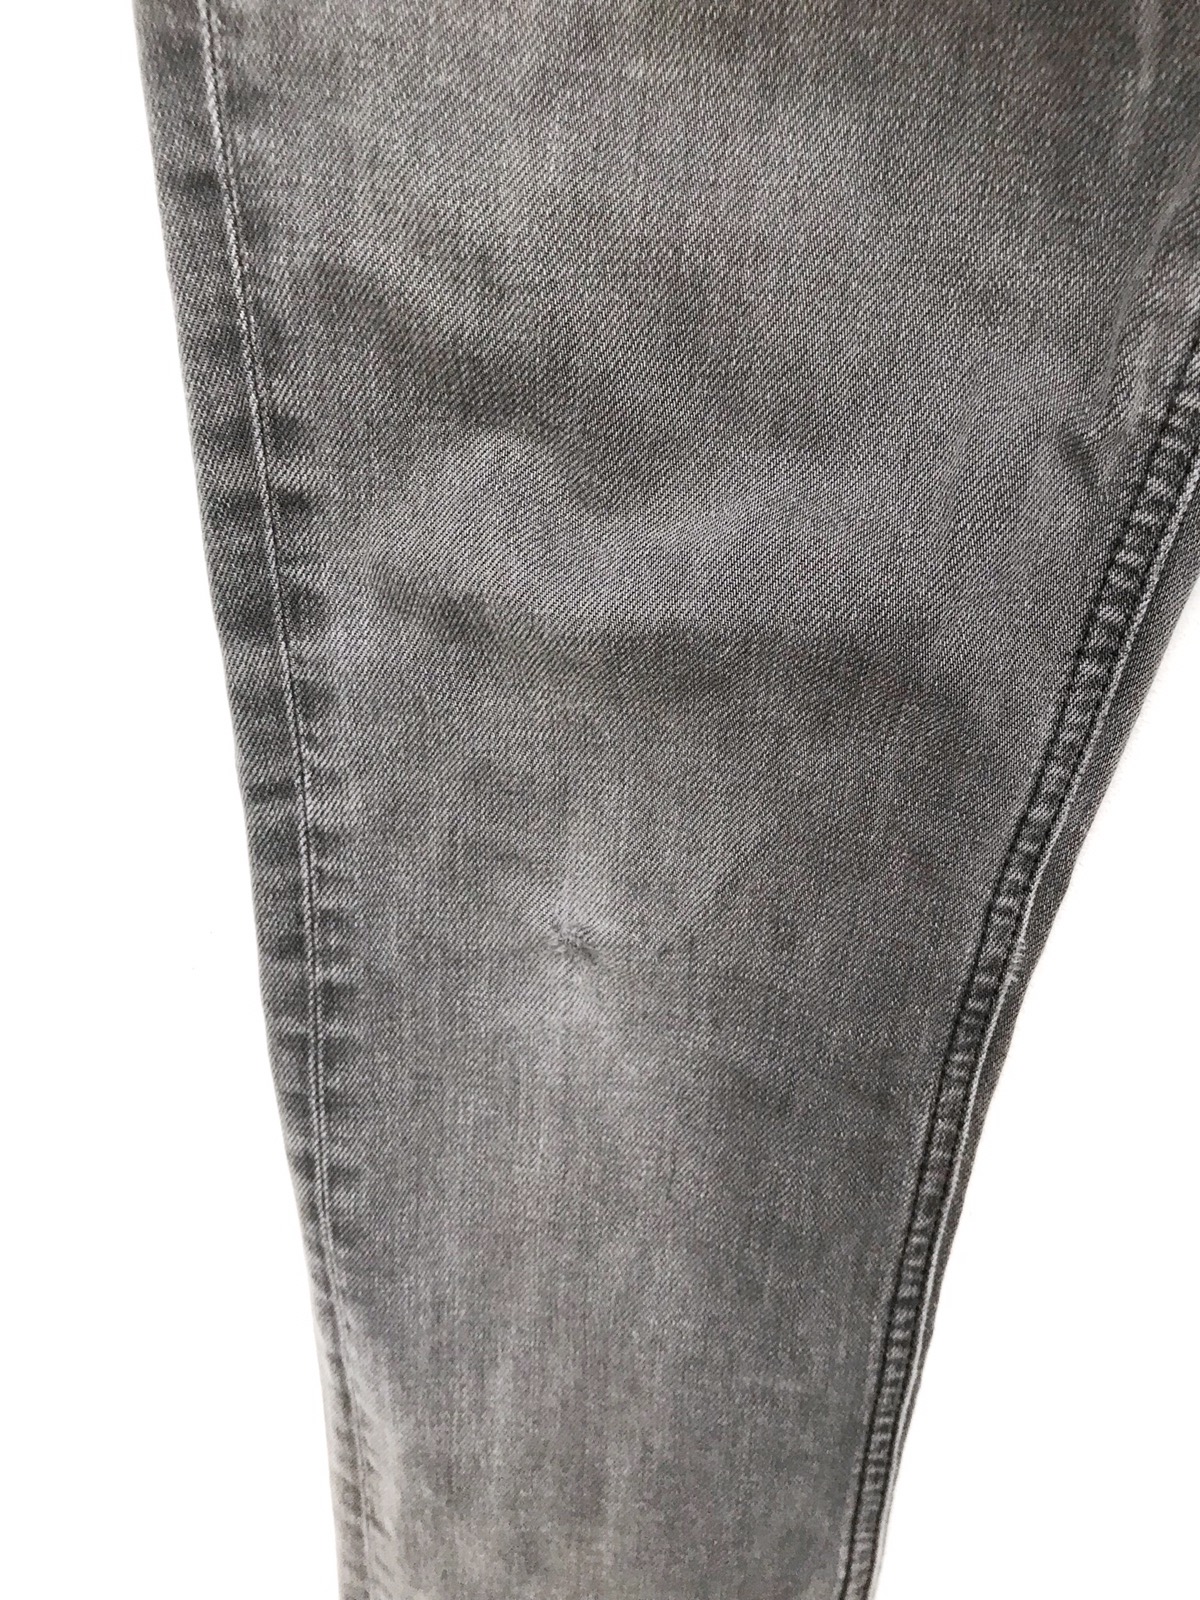 Acne Studios Distressed Skinny Jeans - 7